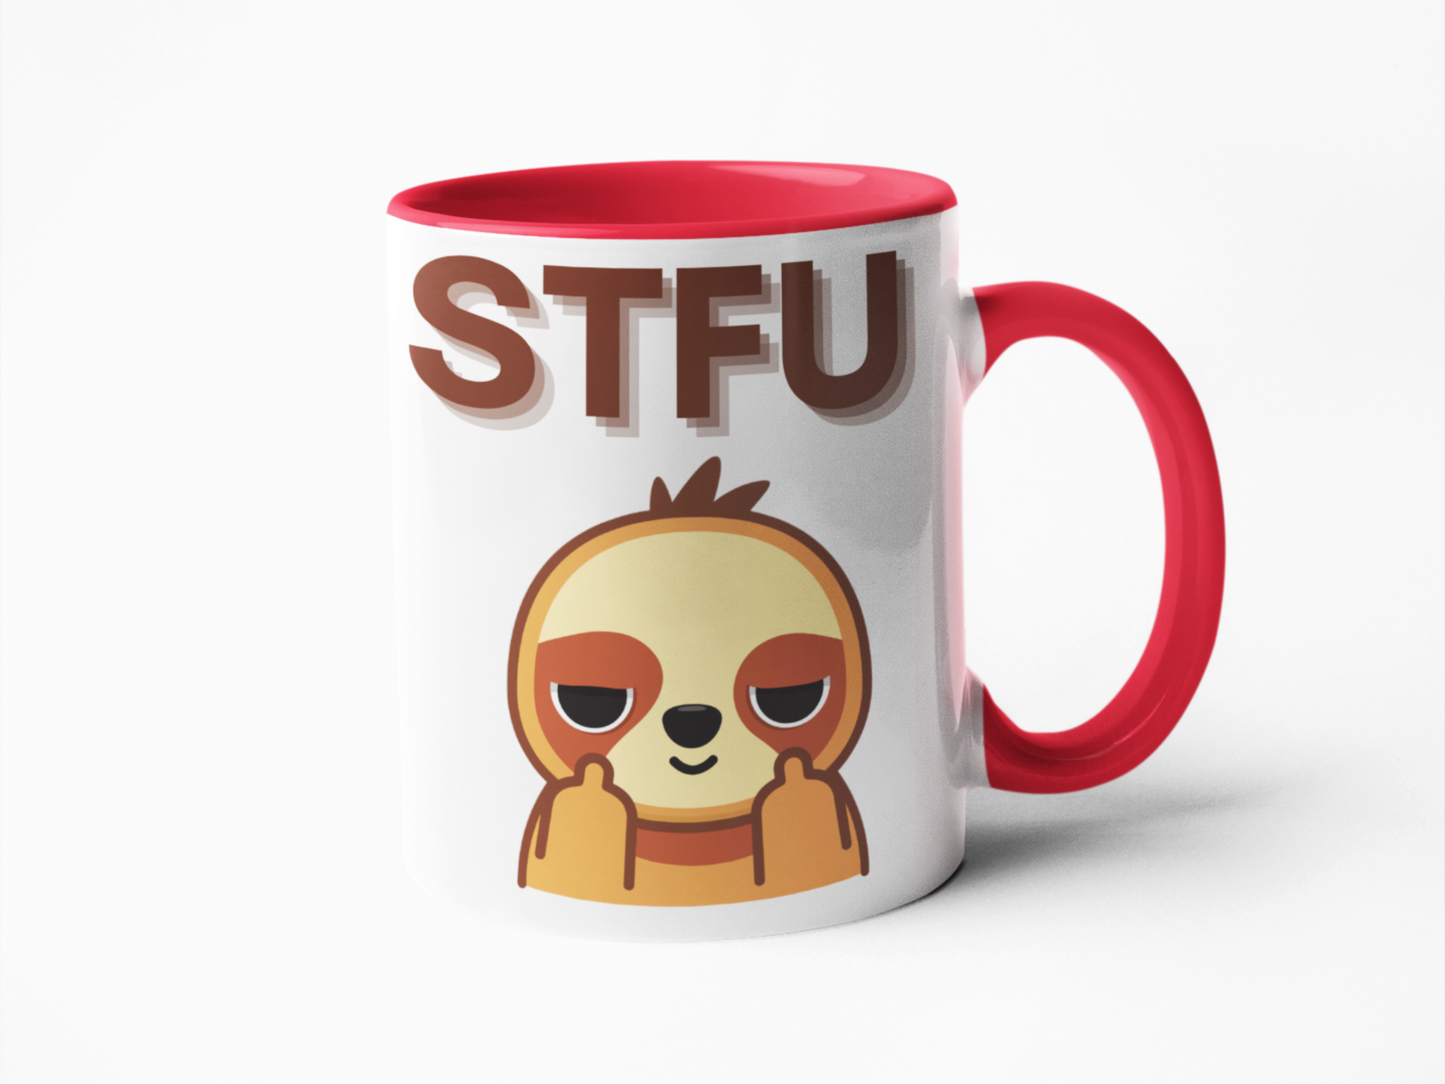 STFU sloth coffee mug